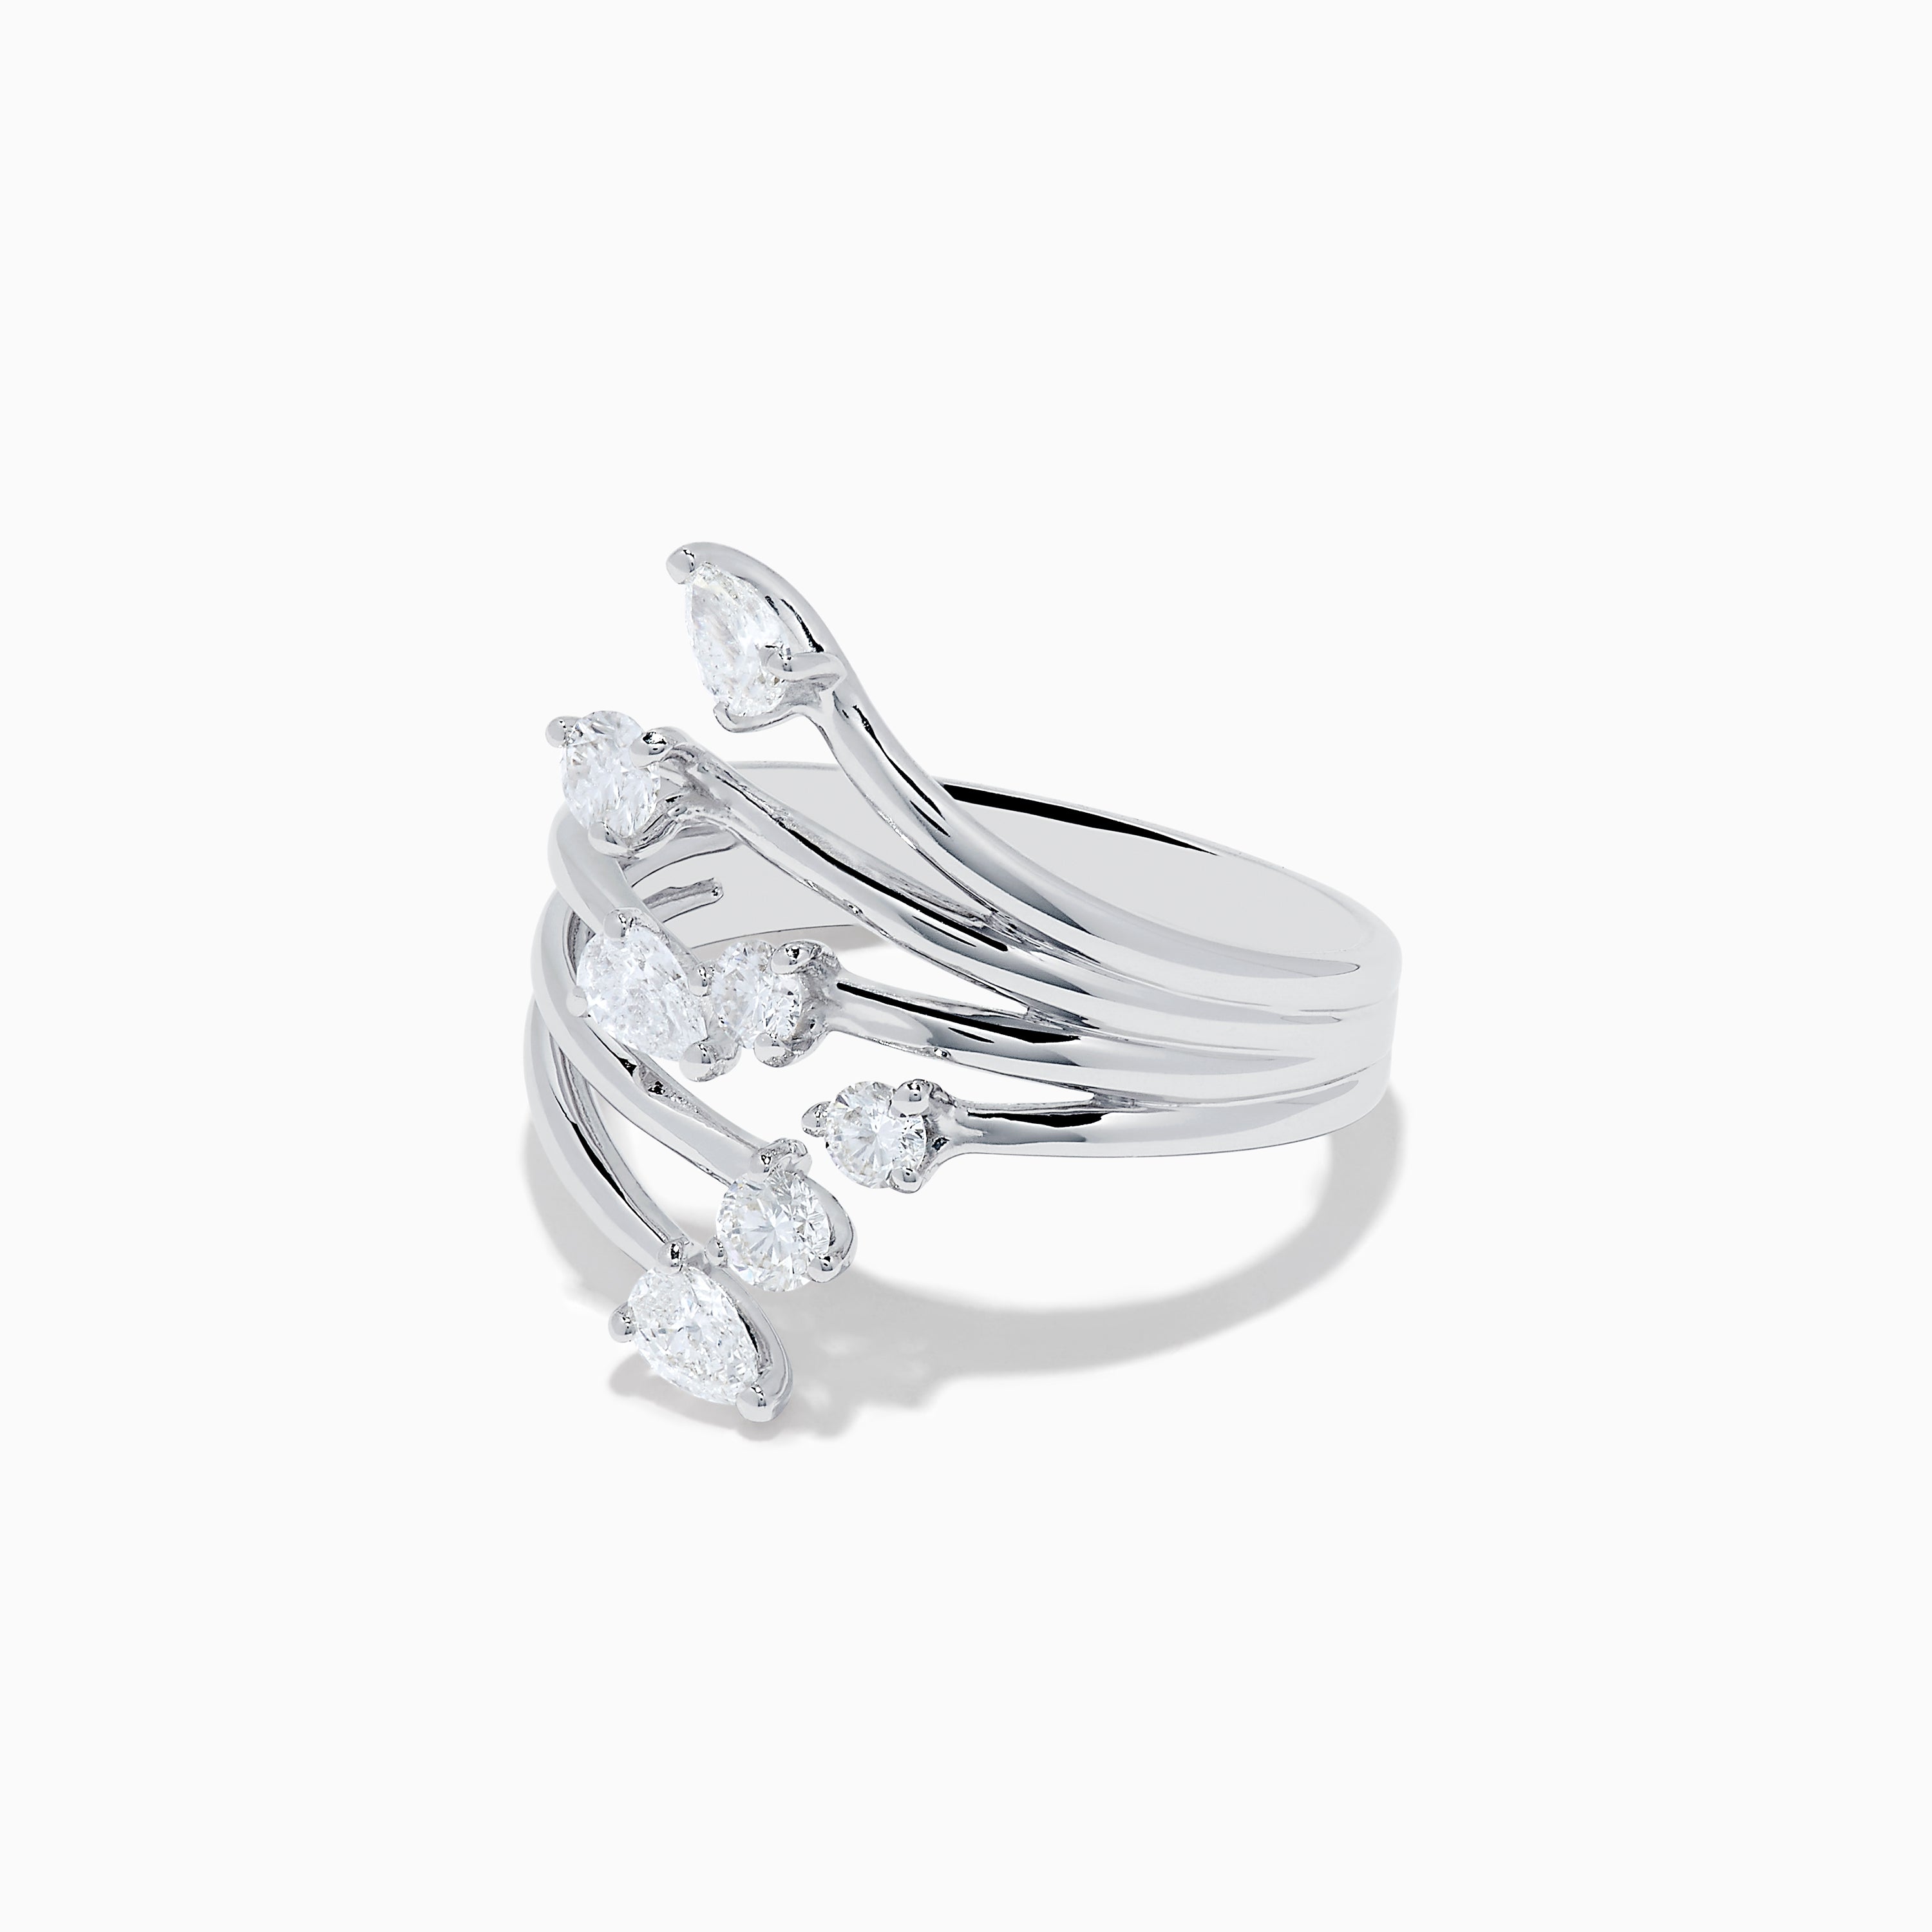 Effy Pave Classica 14K White Gold Diamond Ring